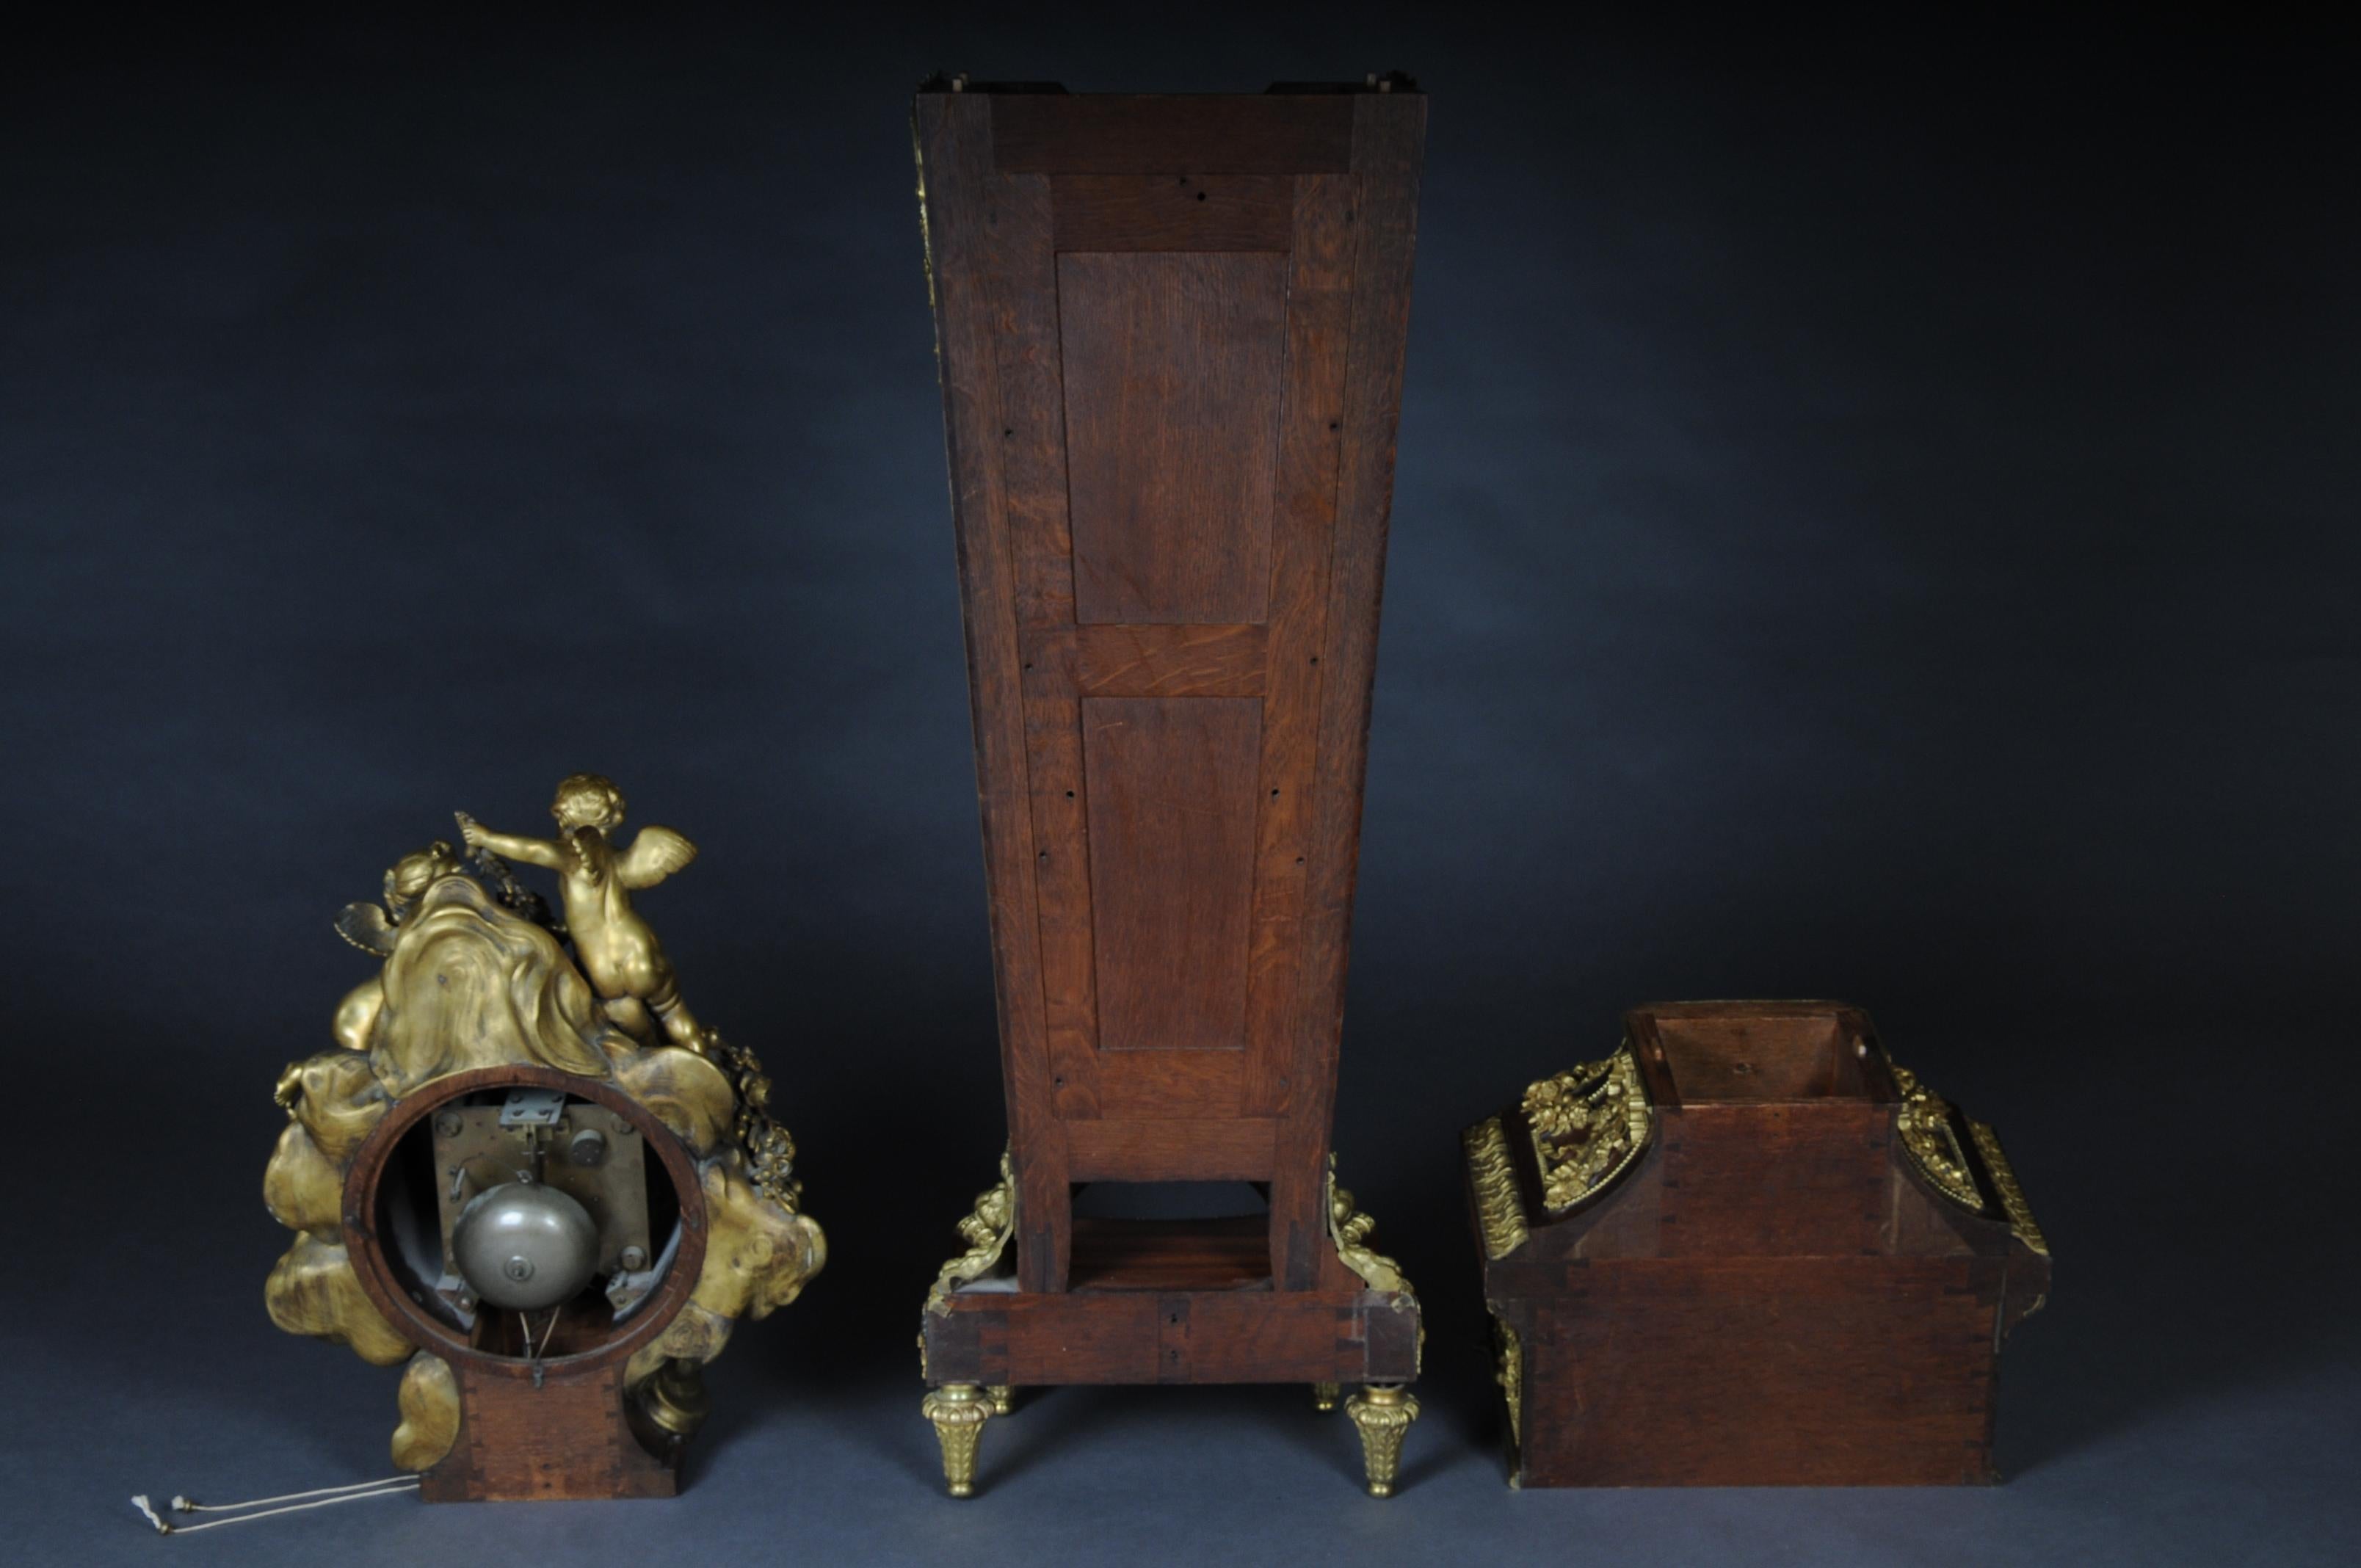 Napoleon III Pedestal Clock “Parquet Regulator” after Jean-Henri Riesener, 1734 For Sale 13